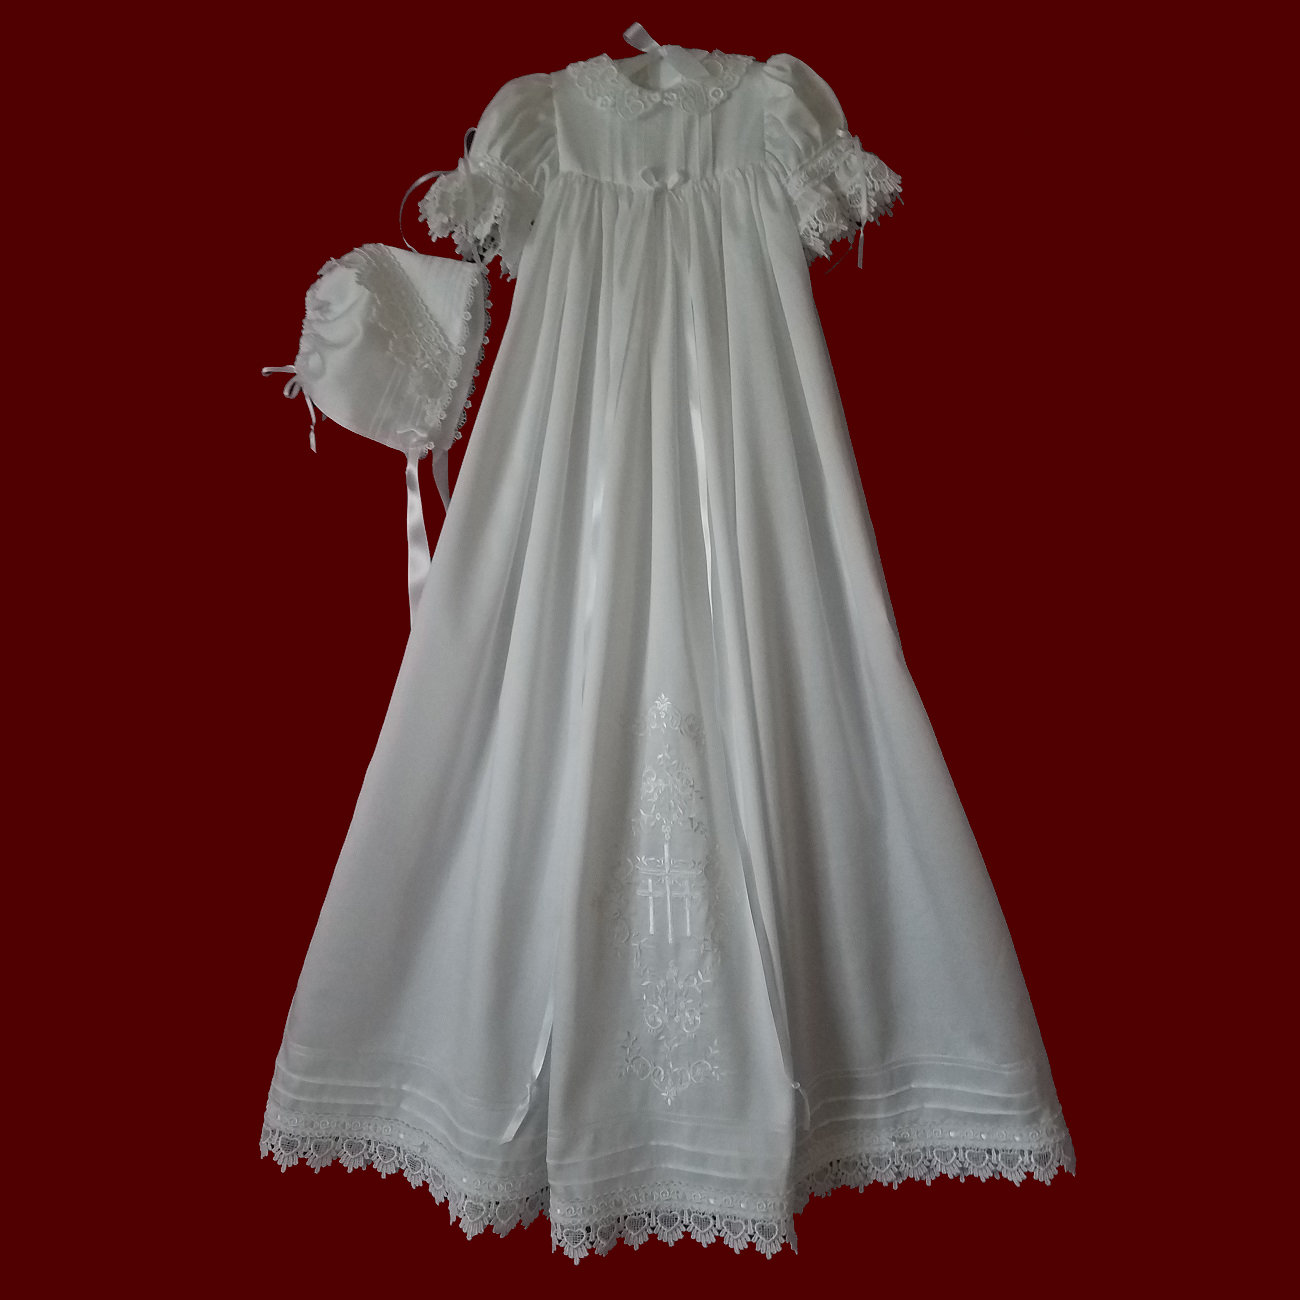 Satin Batiste Girls Christening Gown With Heart Venice Lace, Slip & Bonnet